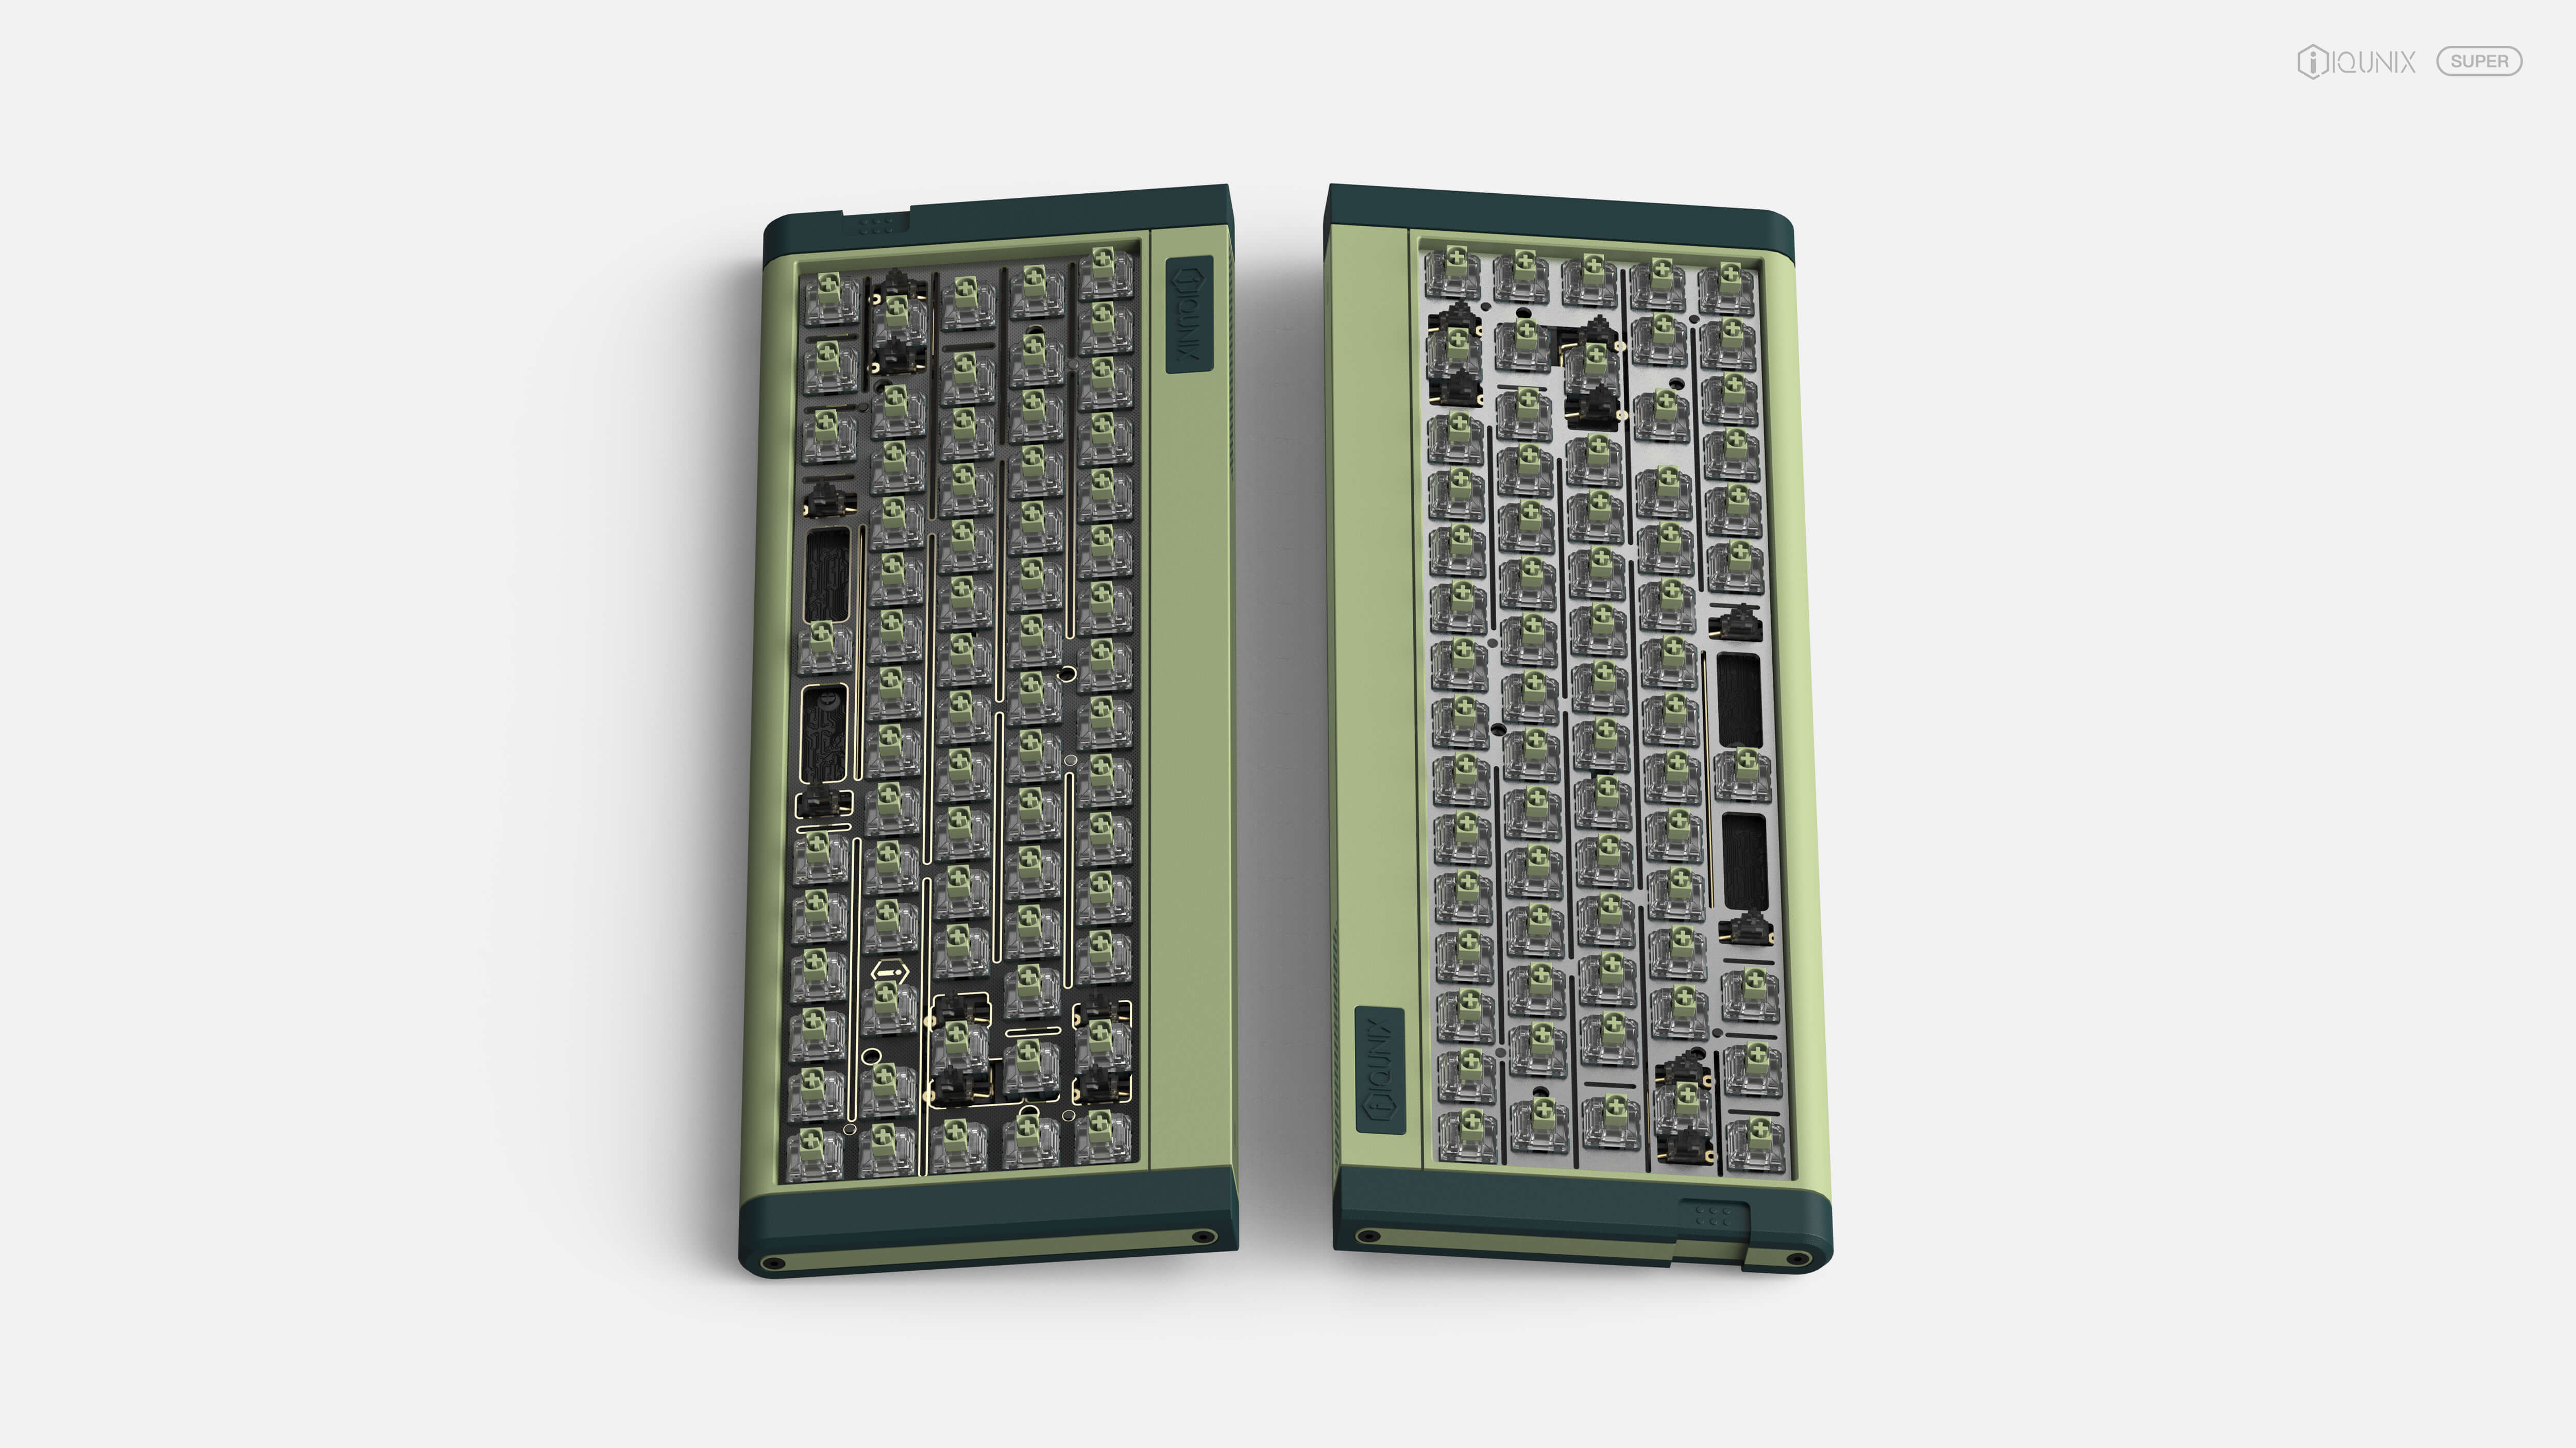 IQUNIX SUPER Ardbeg 65 Custom keyboard